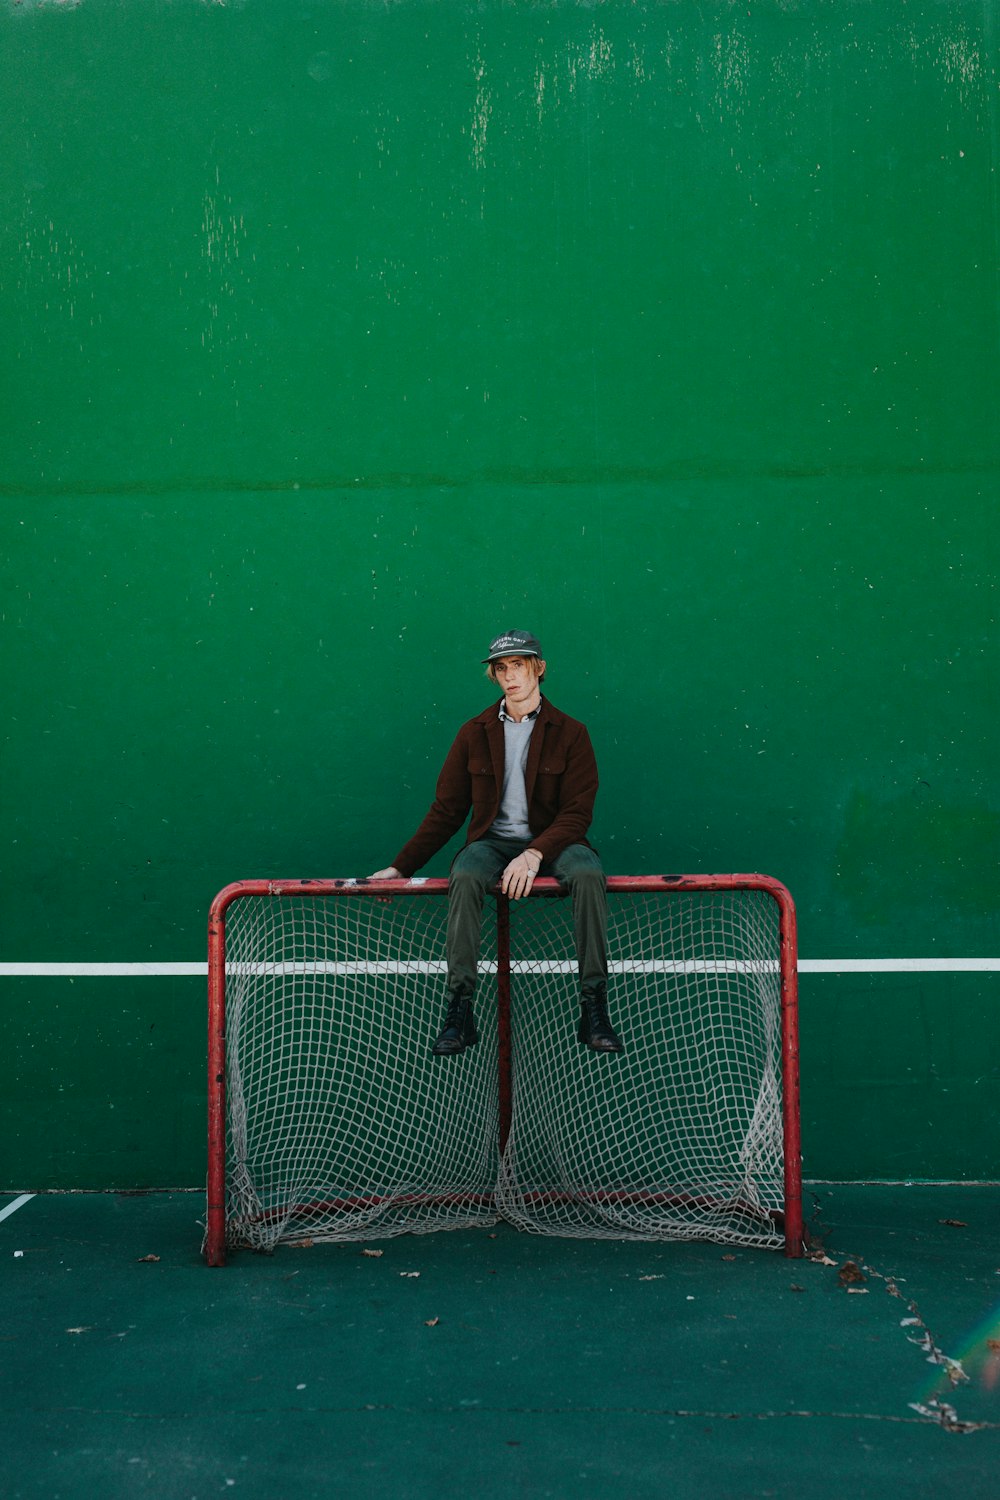 man sitting red net goal